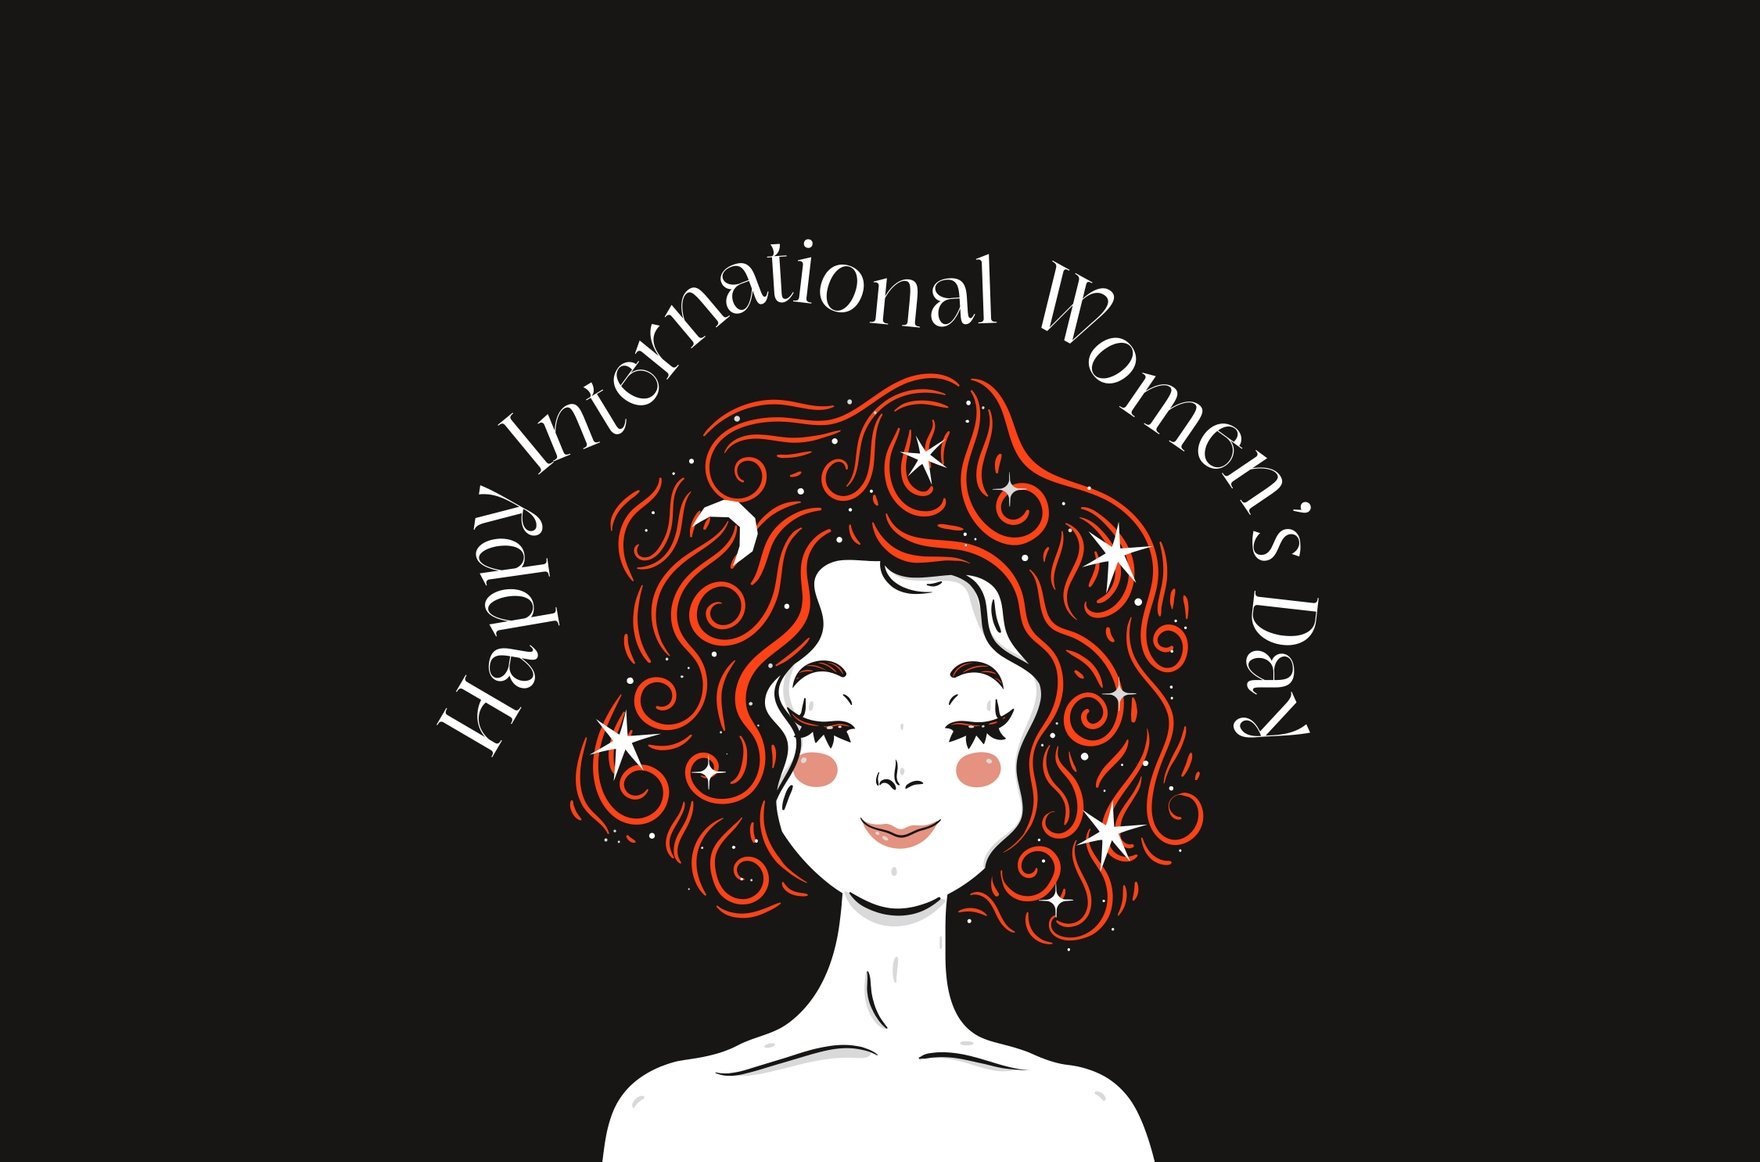 Free International Women's Day Banner in Illustrator, PSD, EPS, SVG, PNG, JPEG